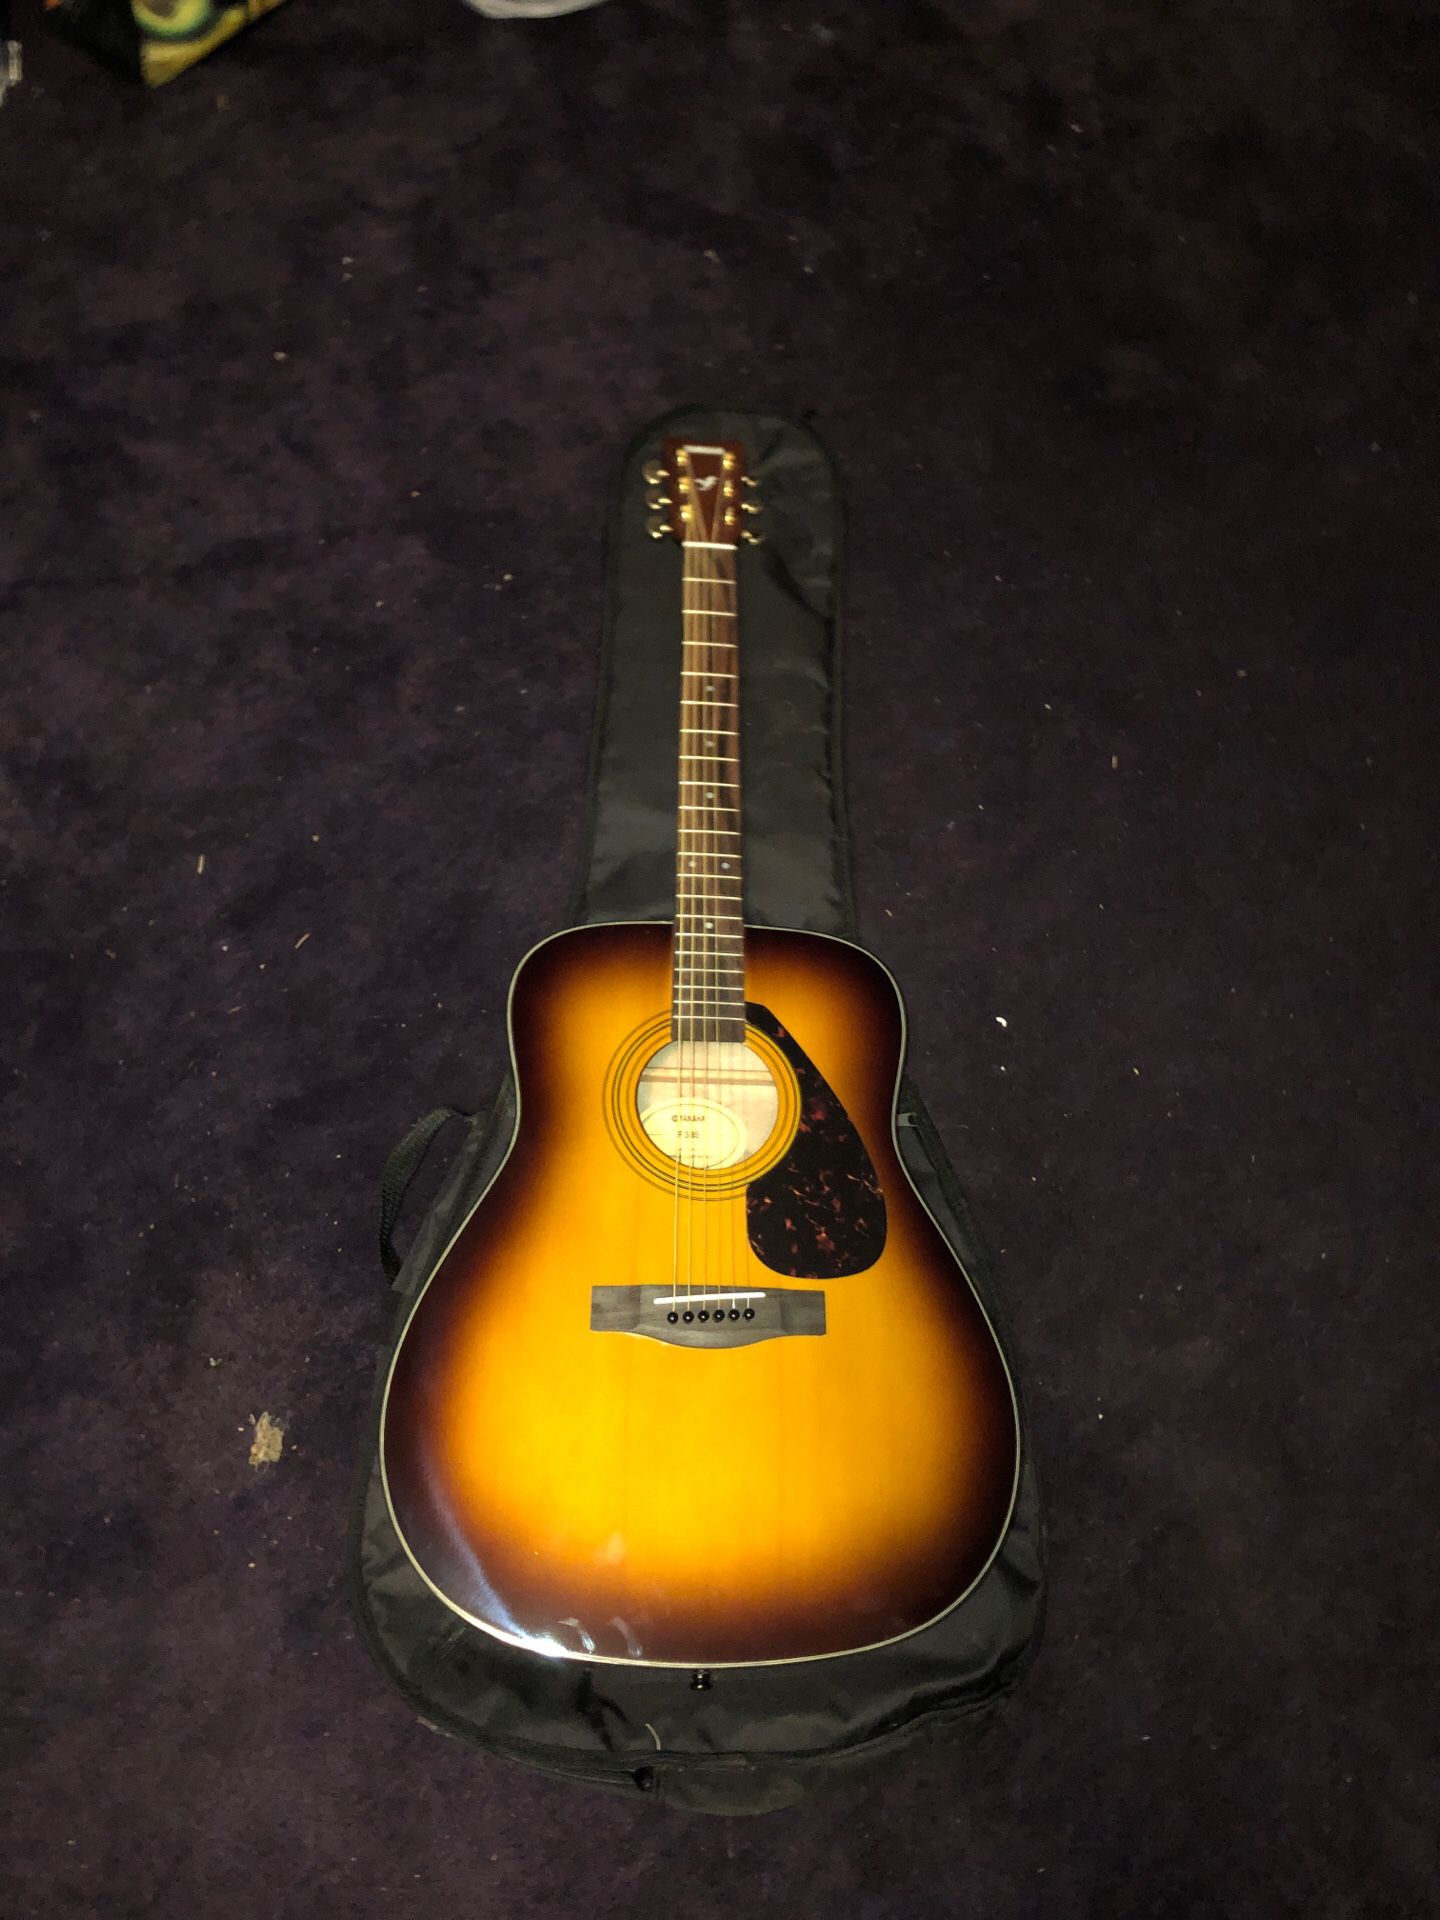 !Yamaha F335 acoustic guitar!